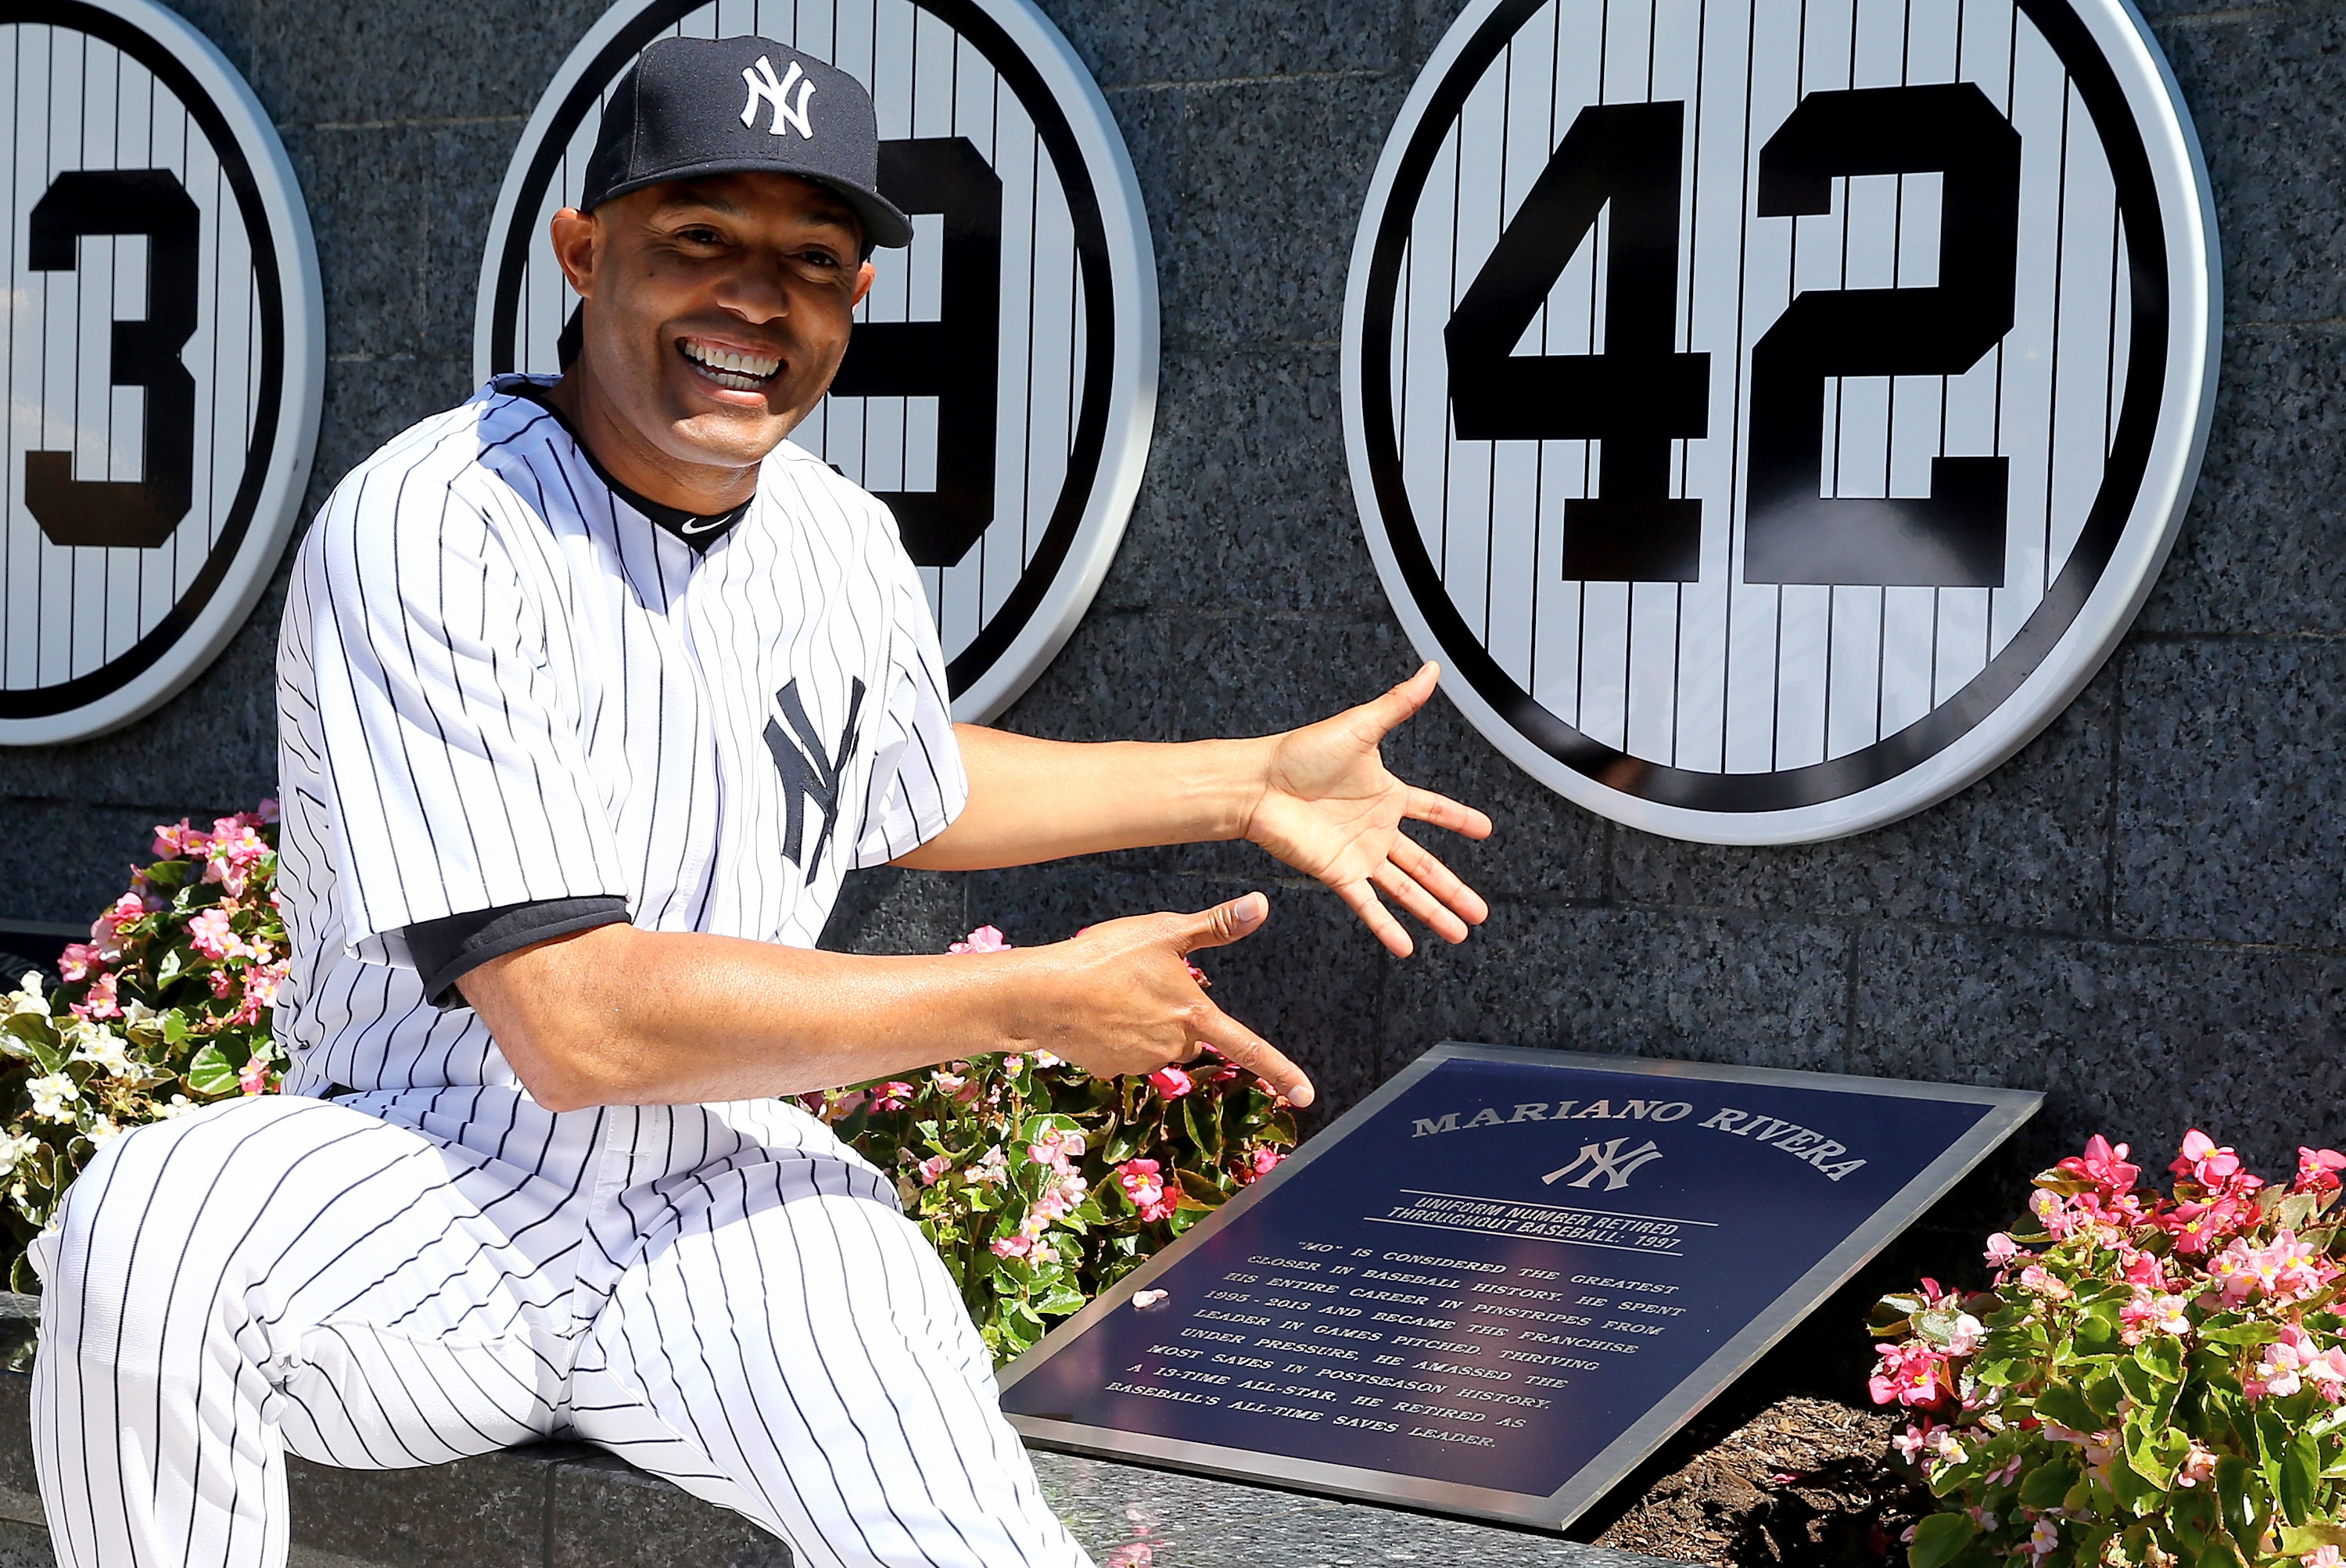 New York Yankees history: Derek Jeter Reaches 2,500 Hits